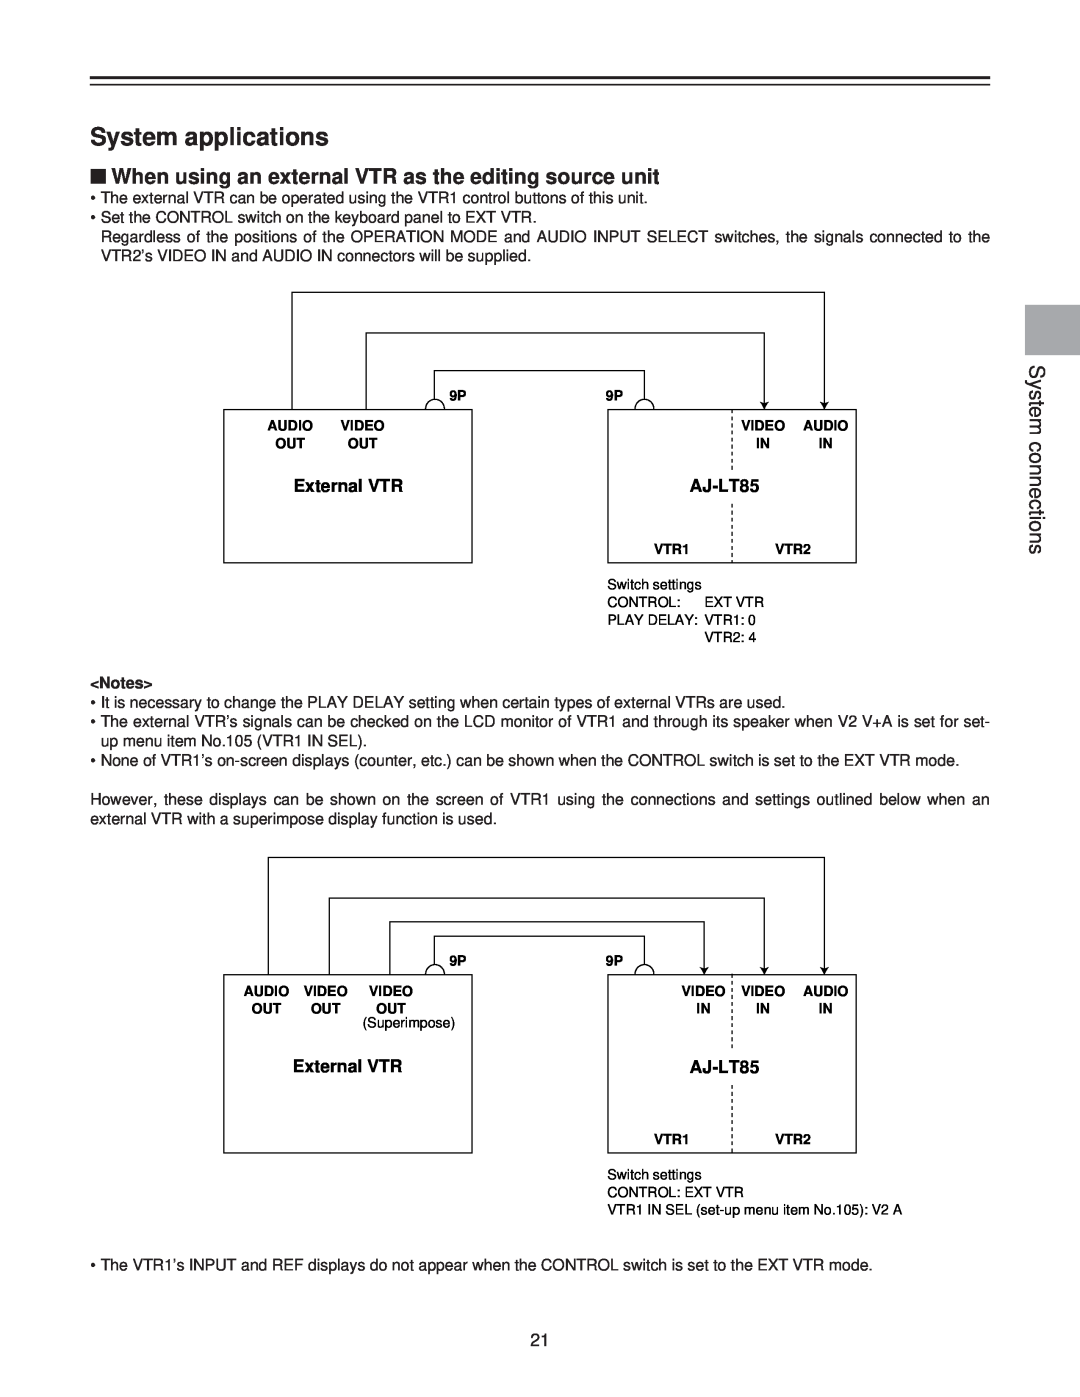 Panasonic AJ-LT85P manual When using an external VTR as the editing source unit, External VTR, System applications 